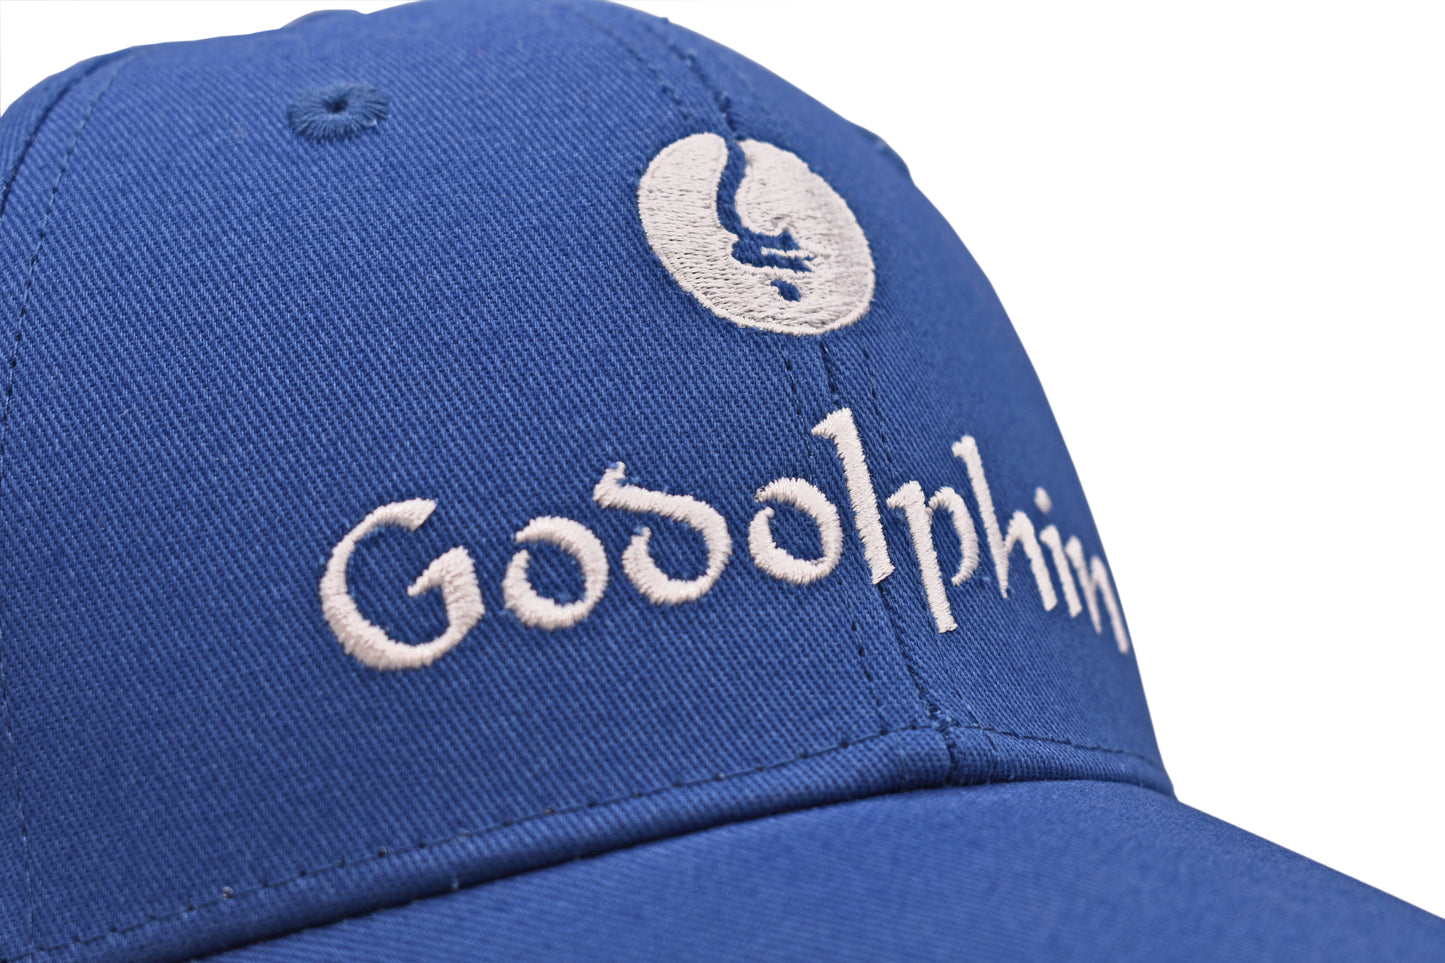 Godolphin Baseball Cap - Blue